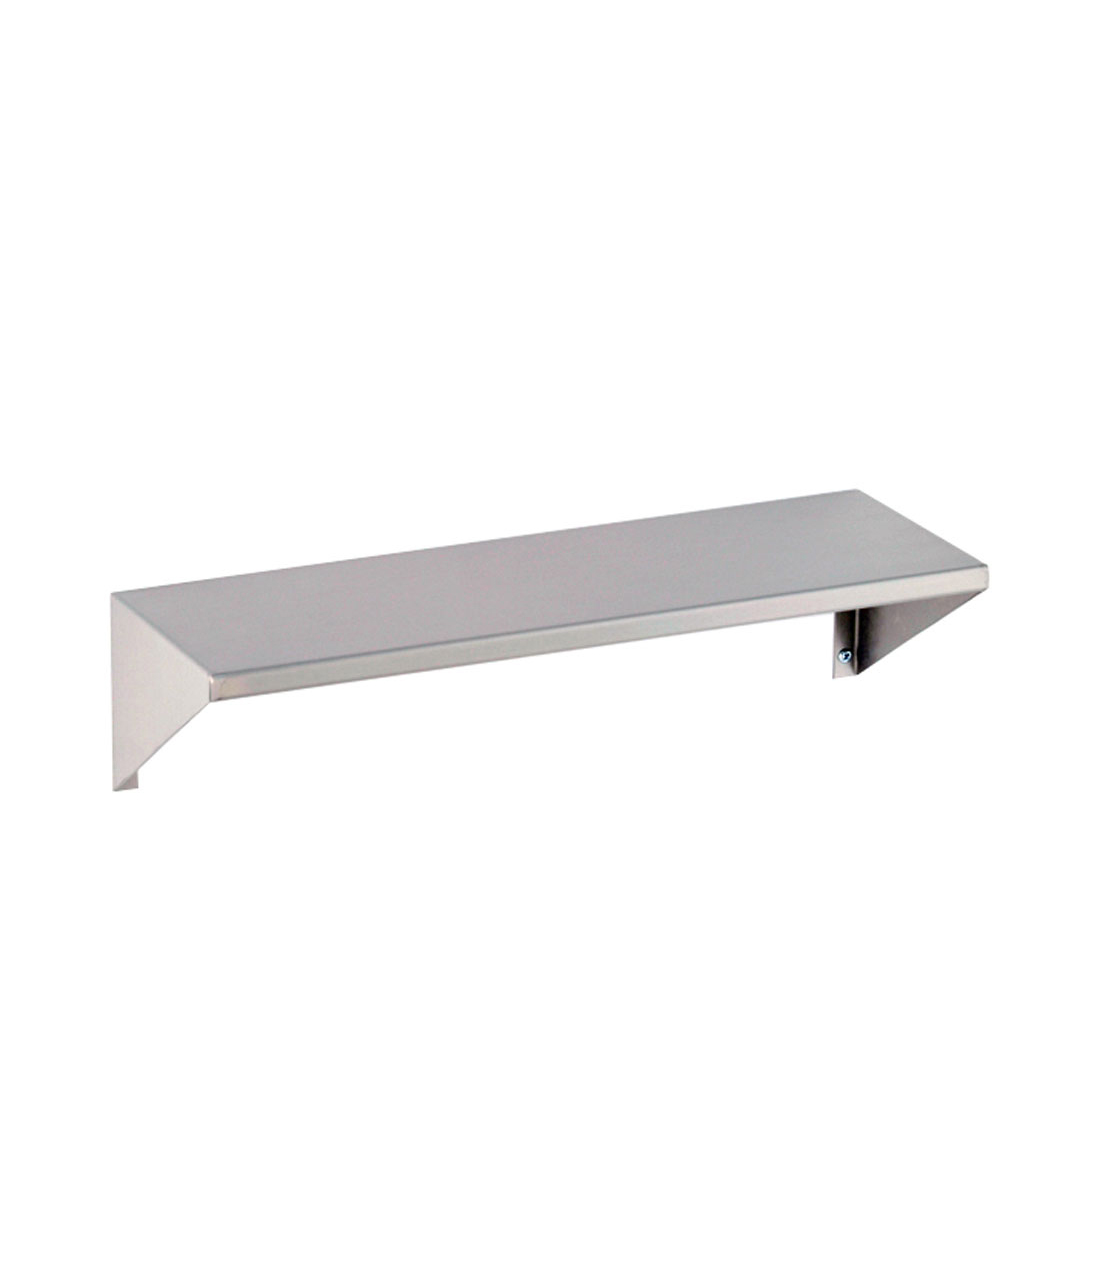 Stainless Steel Shelf - (Model #: s-5-series) main image